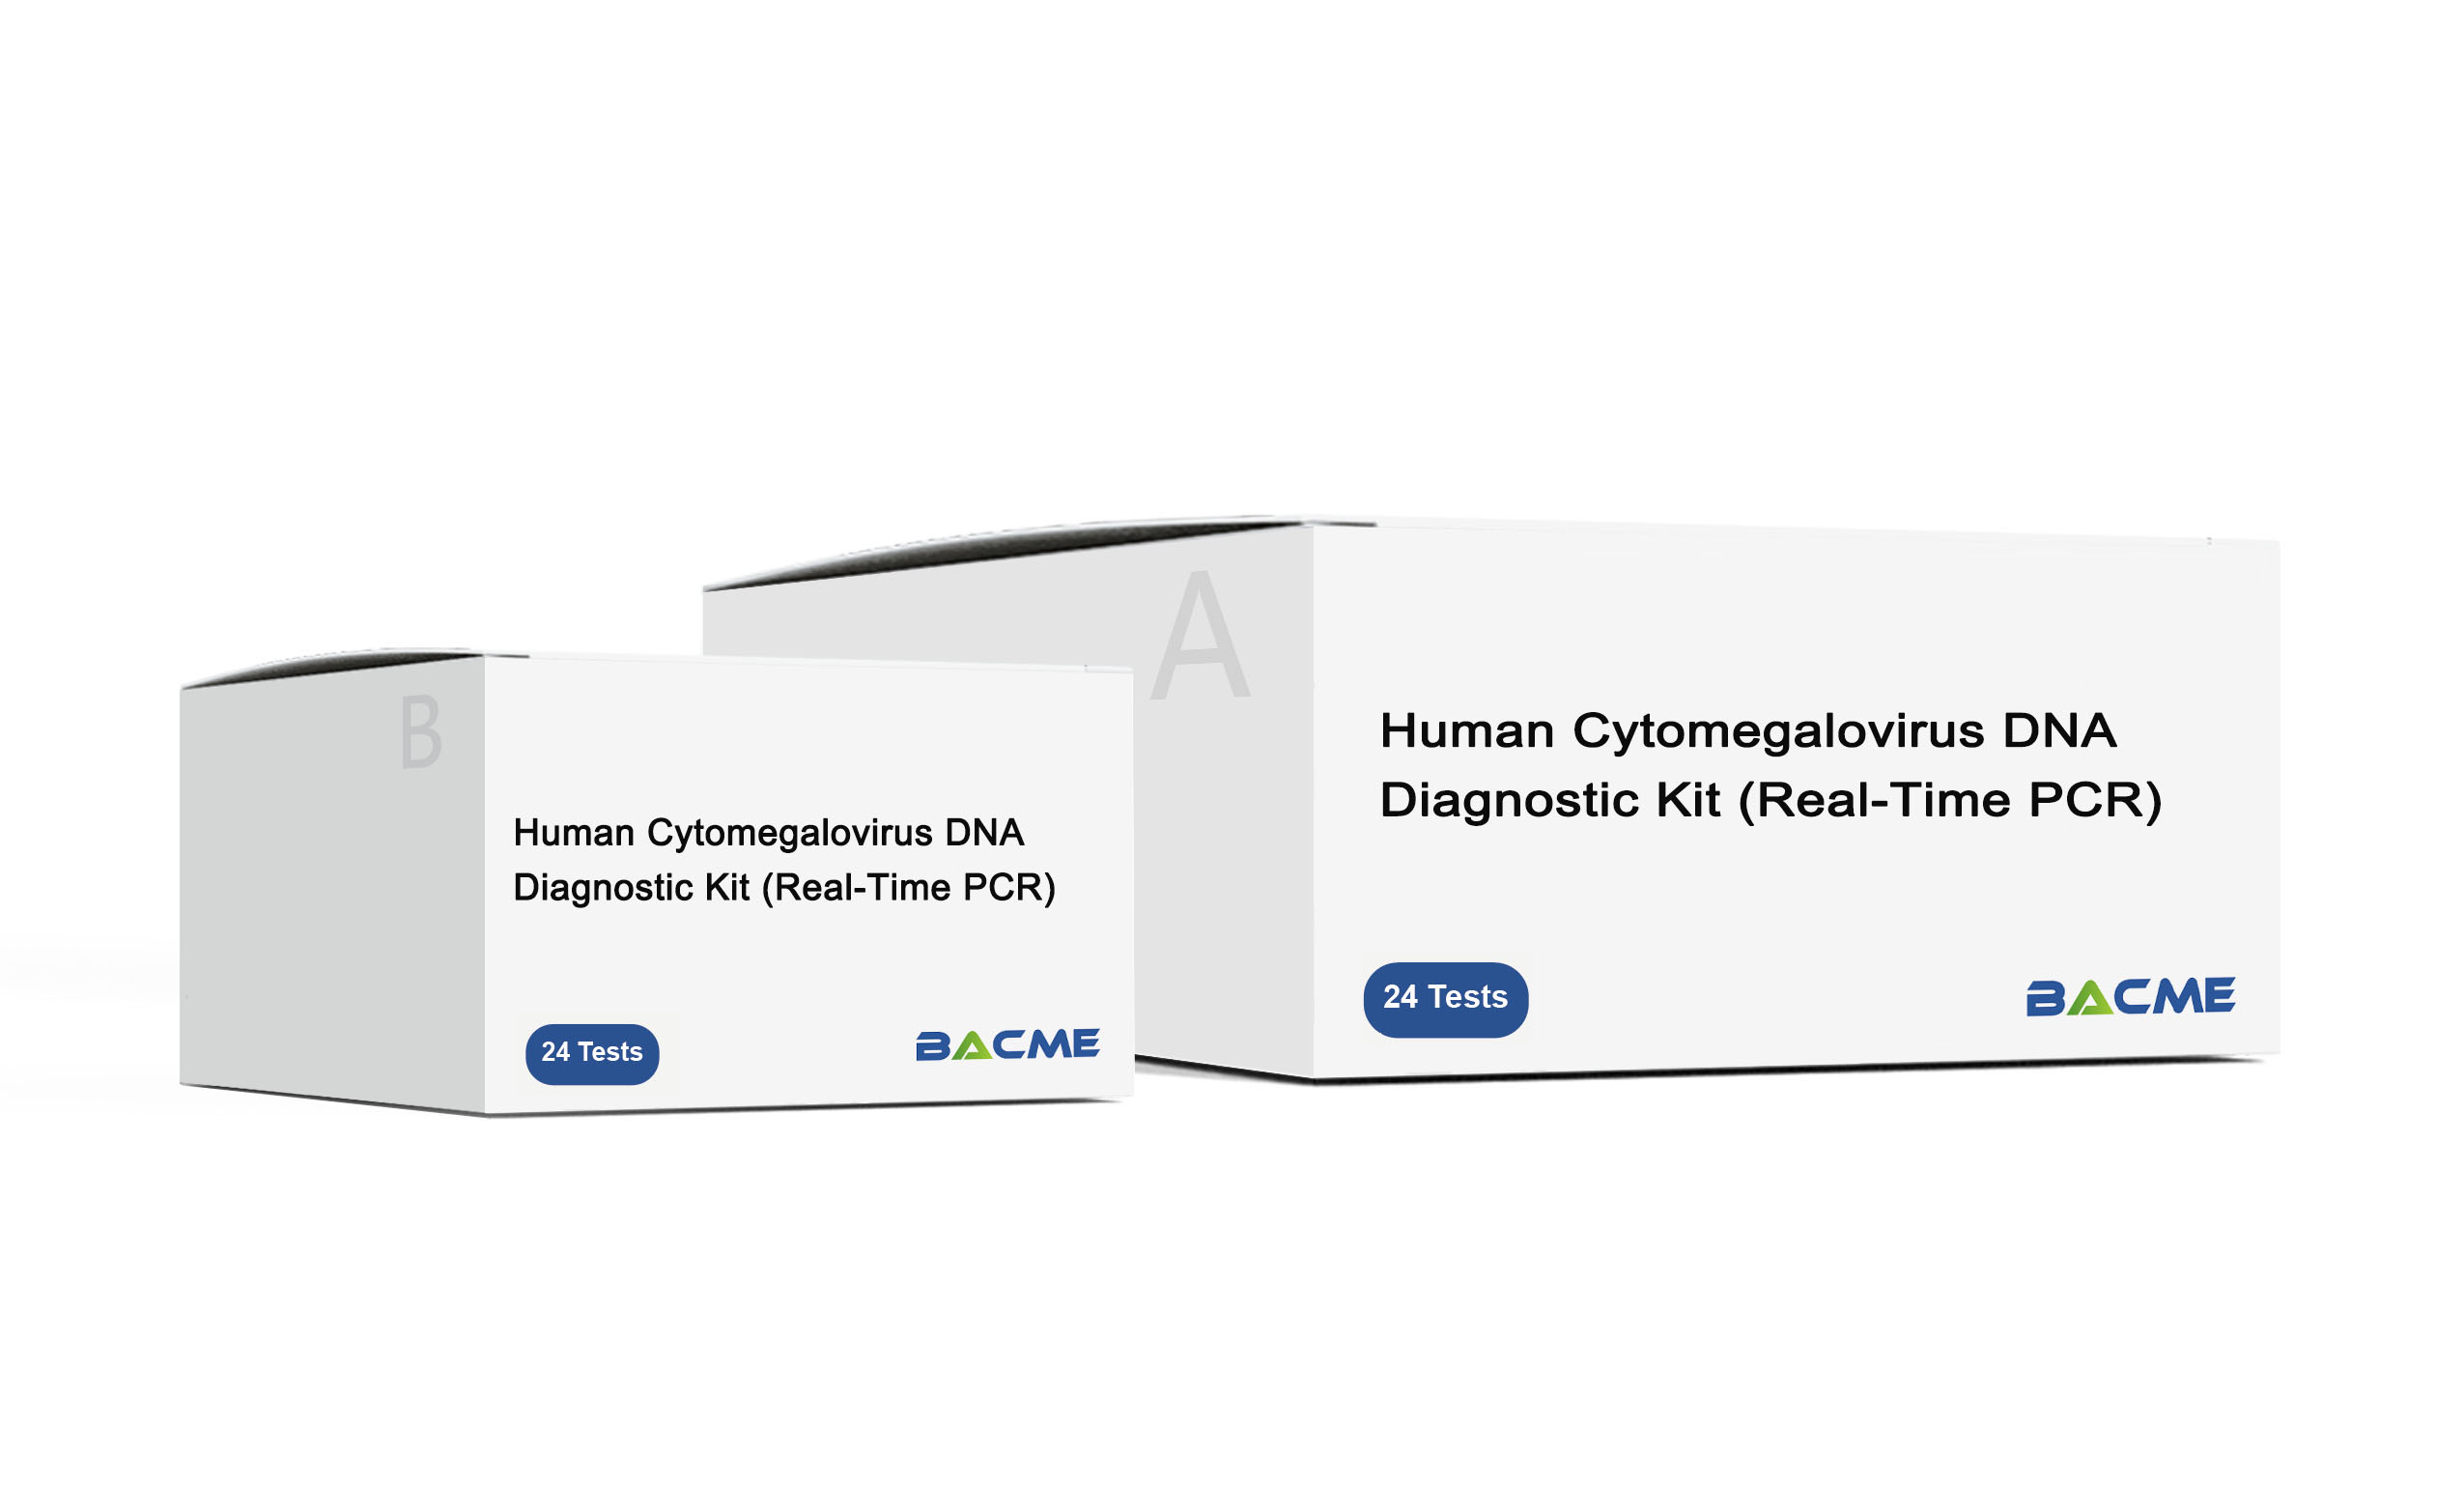 Human Cytomegalovirus DNA Diagnostic Kit (Real-Time PCR)